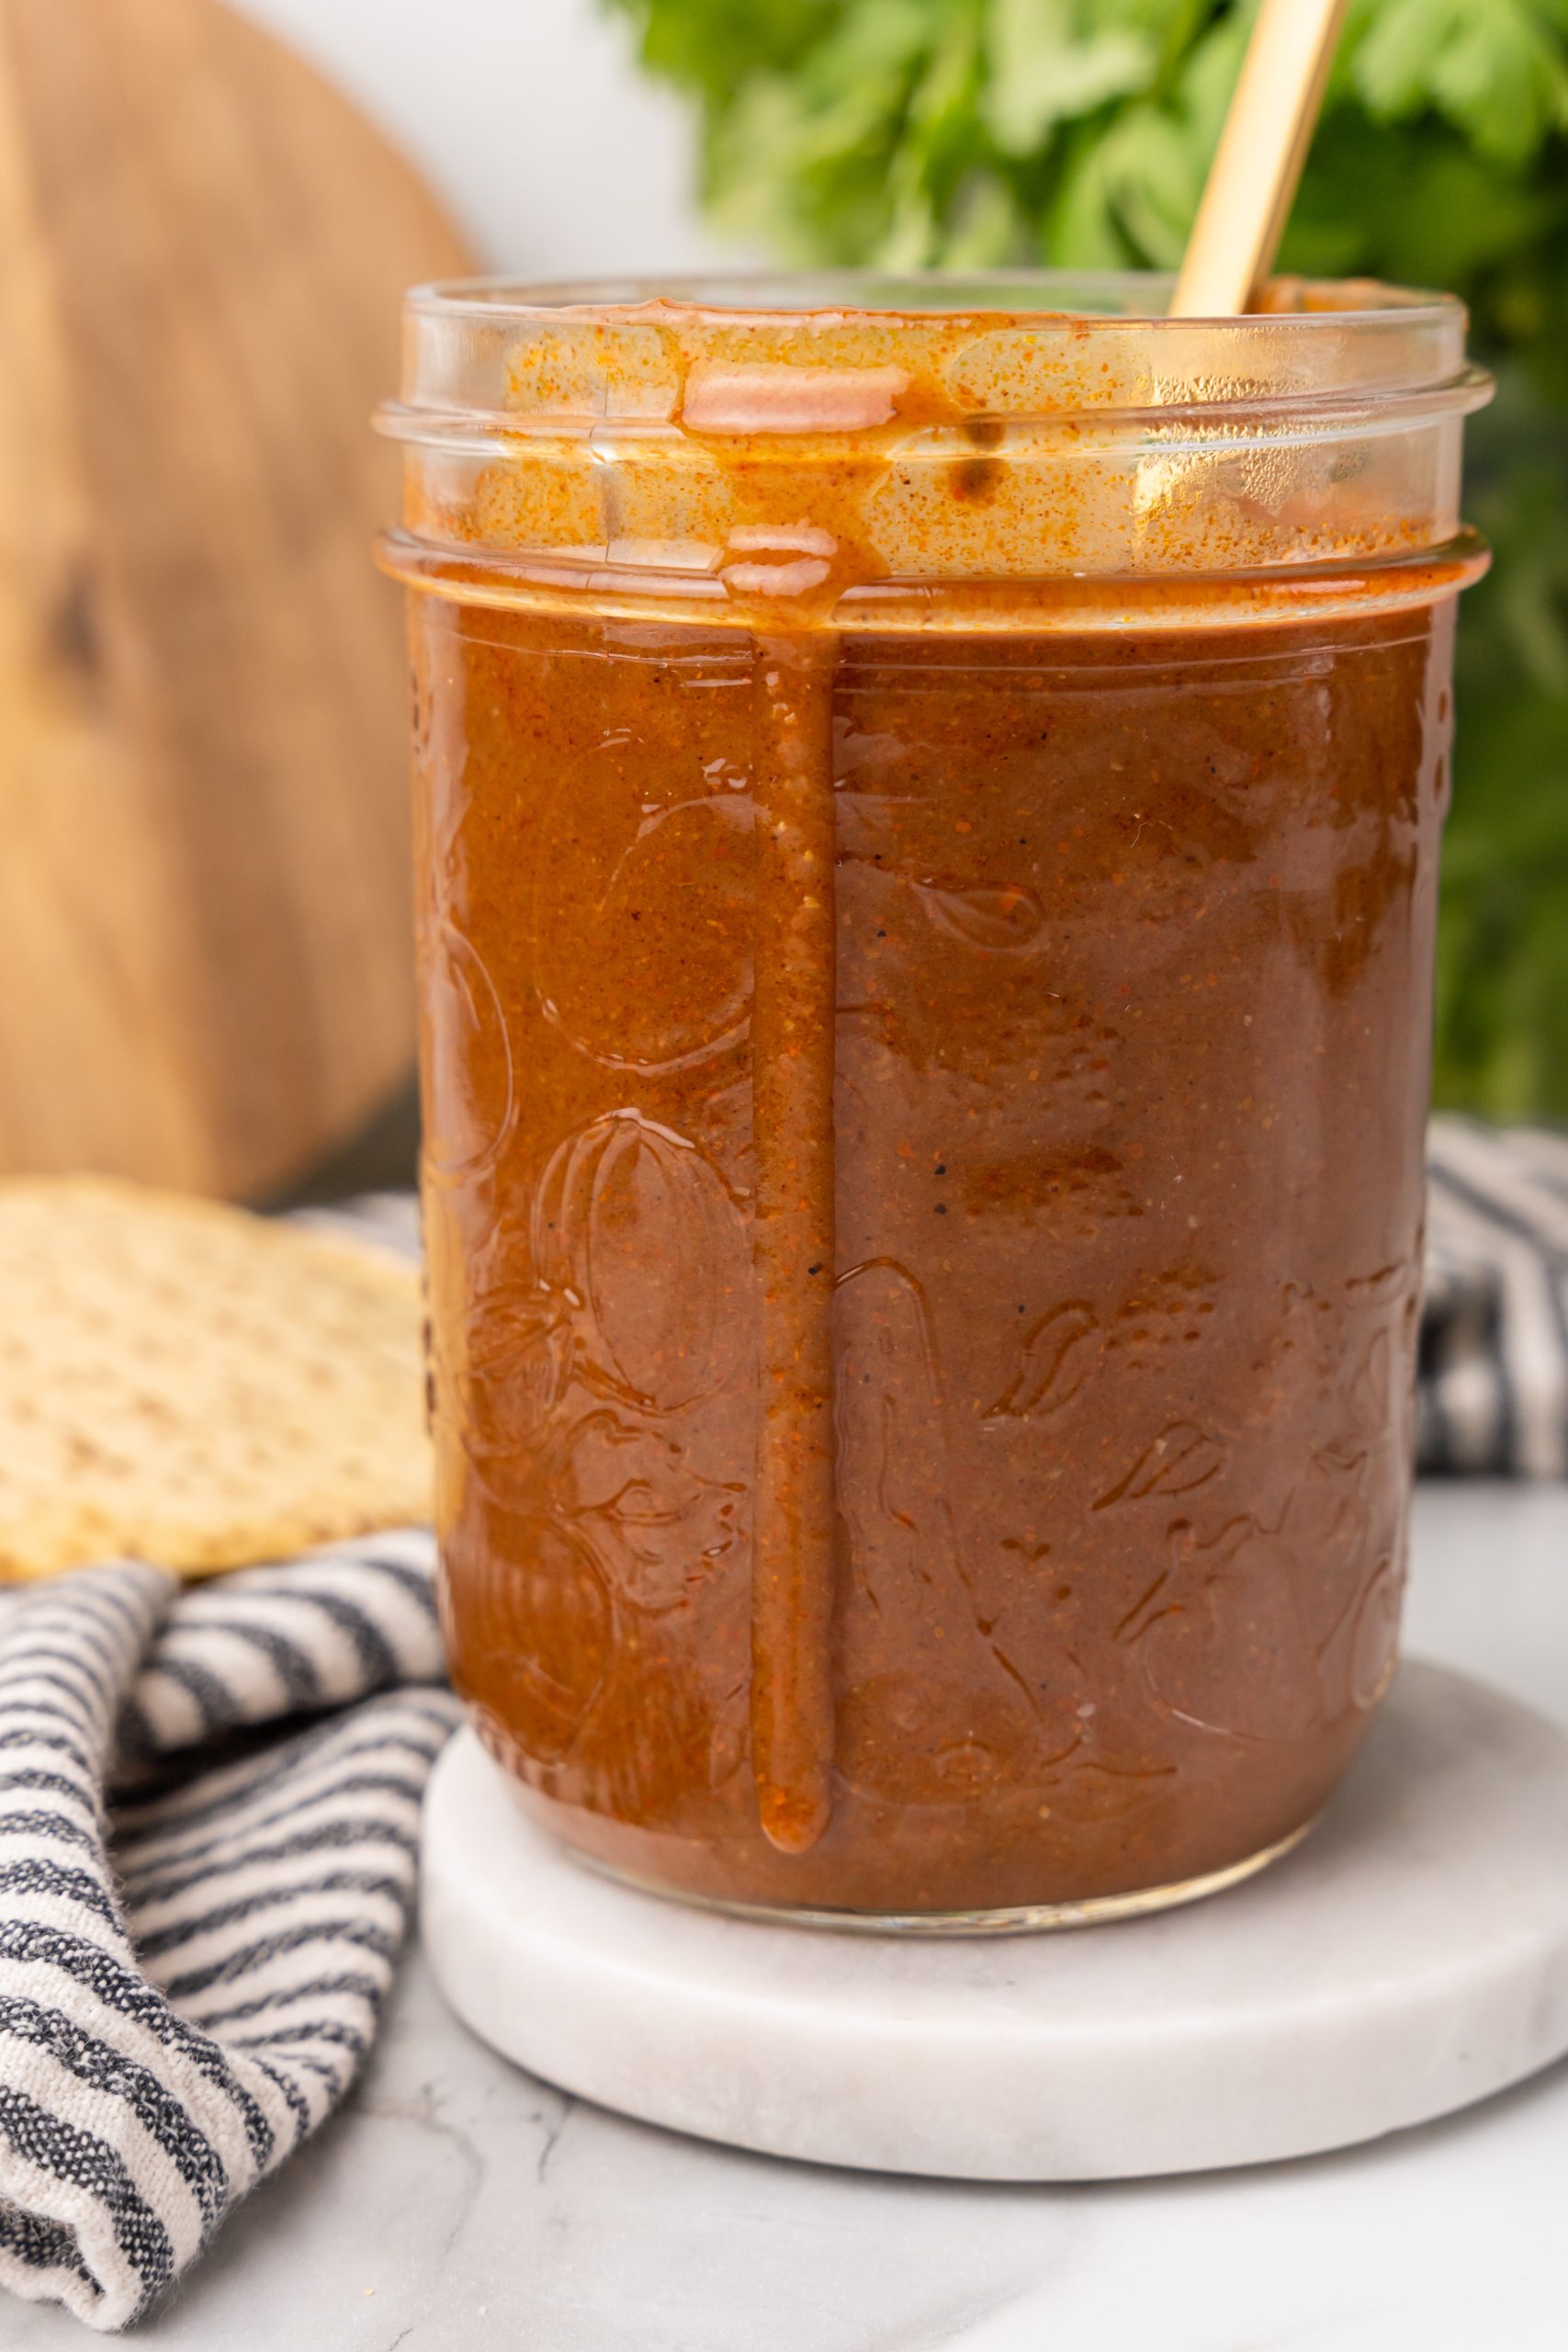 red enchilada sauce in a glass mason jar